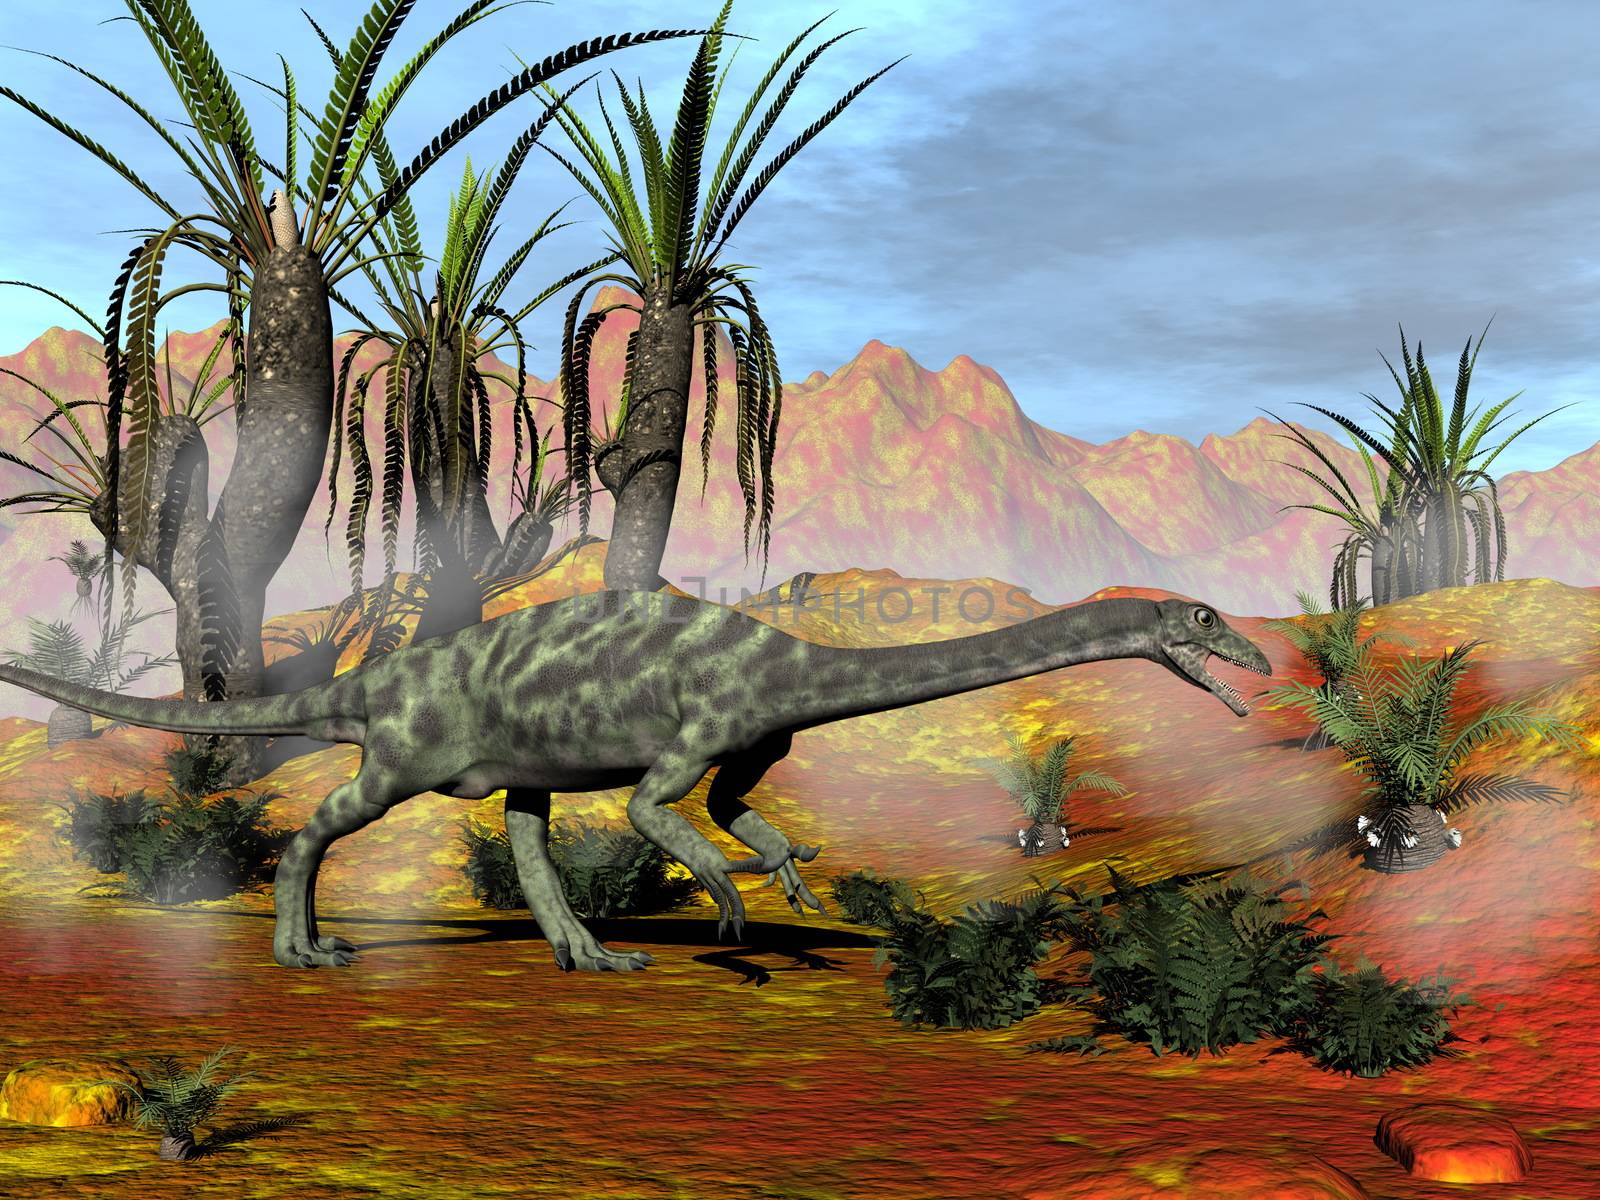 Anchisaurus dinosaurs - 3D render by Elenaphotos21